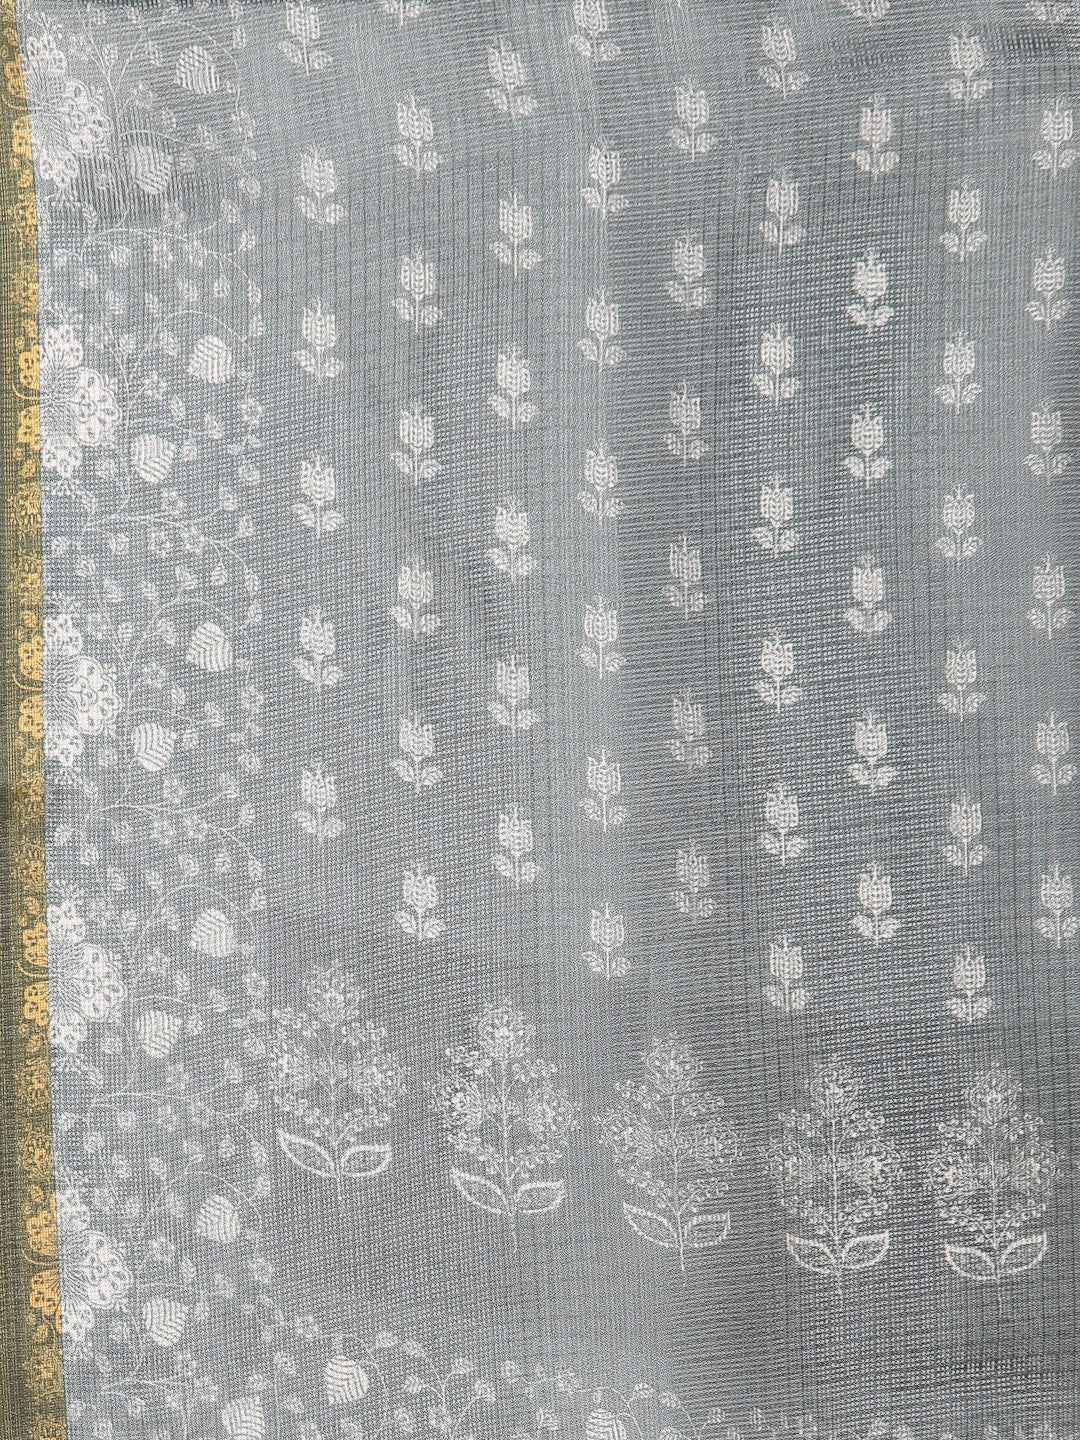 Women's Grey cotton blend Printed Sleeveless Round Neck Kurta with Sharara & Dupatta (3Pieces) set - Myshka